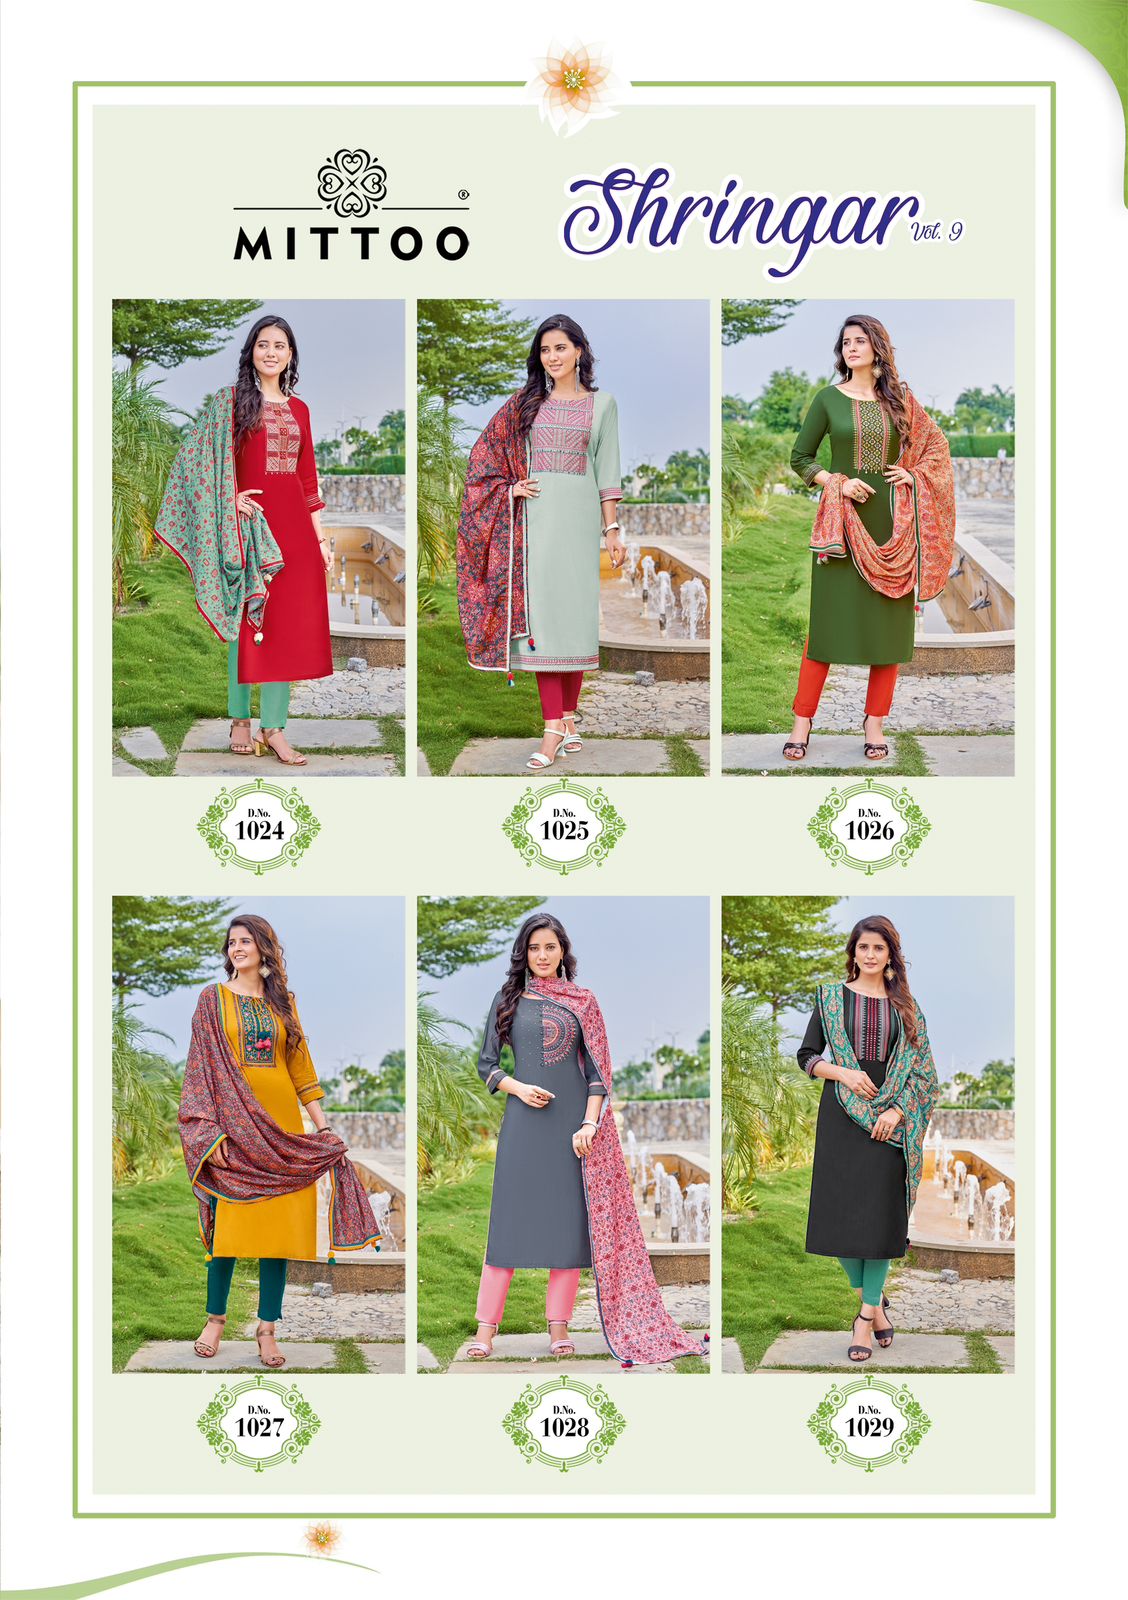 Mittoo Shringar Vol 9 collection 2